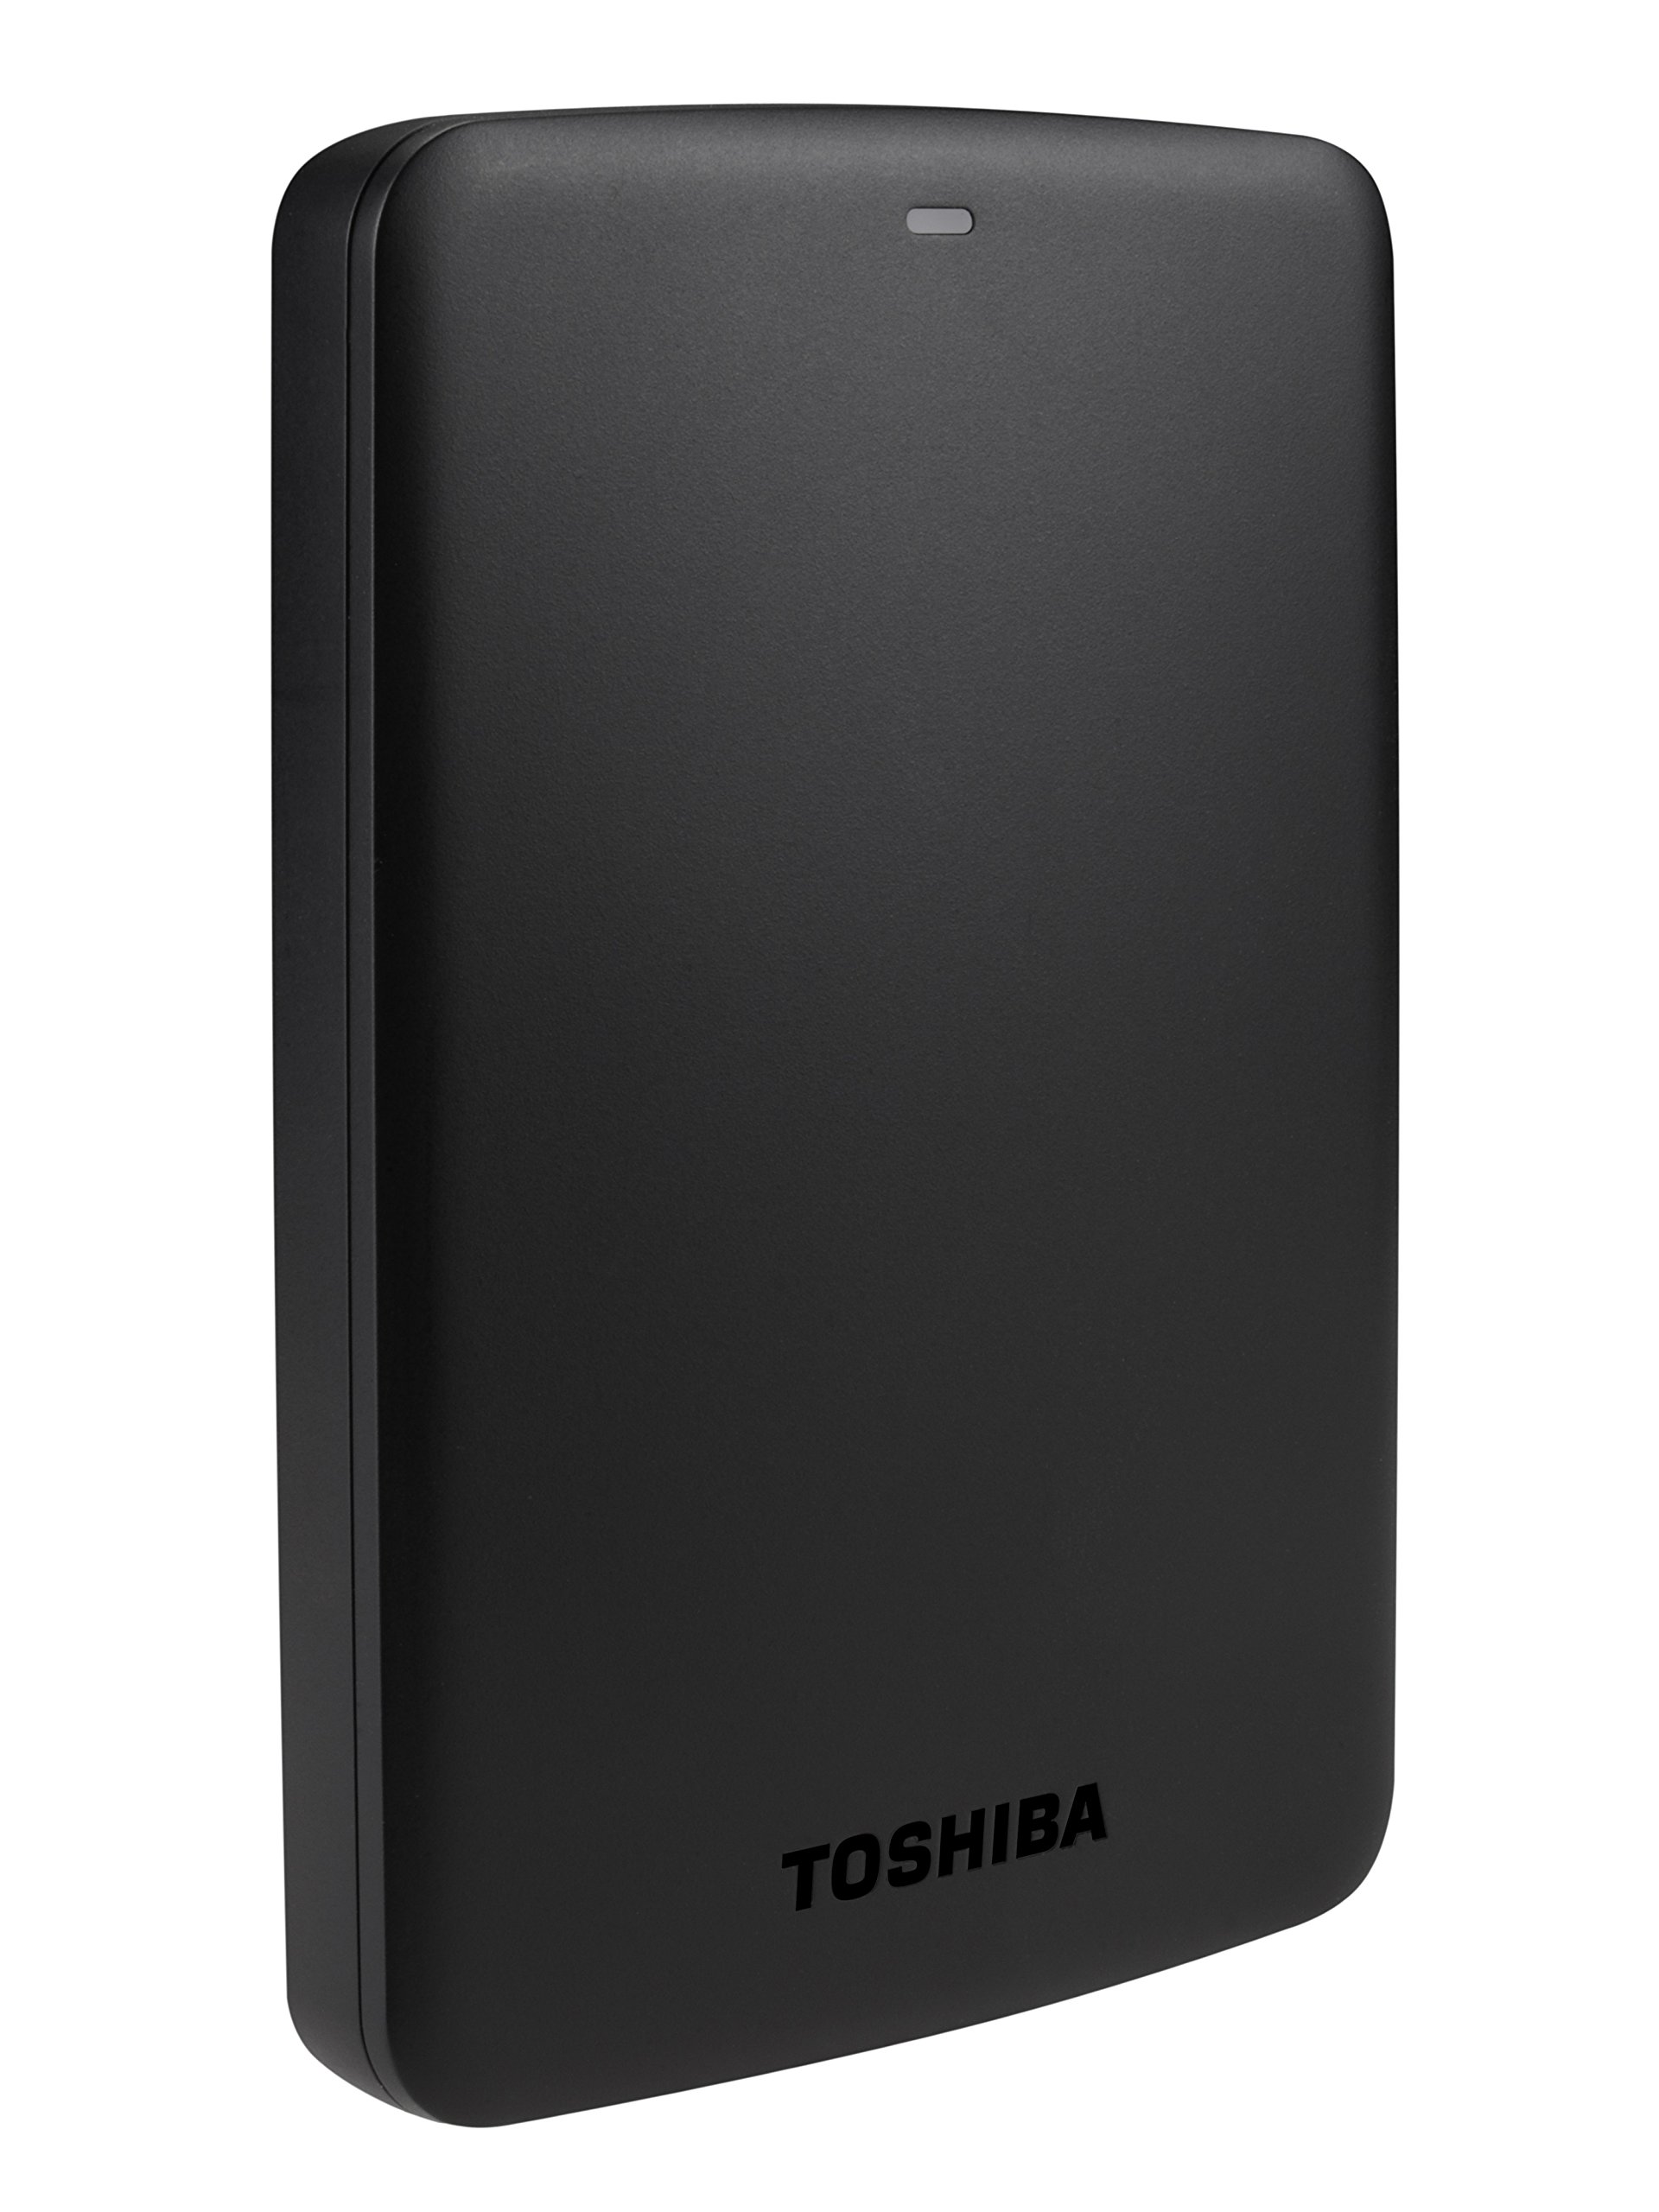 toshiba external hard drive 1tb driver download